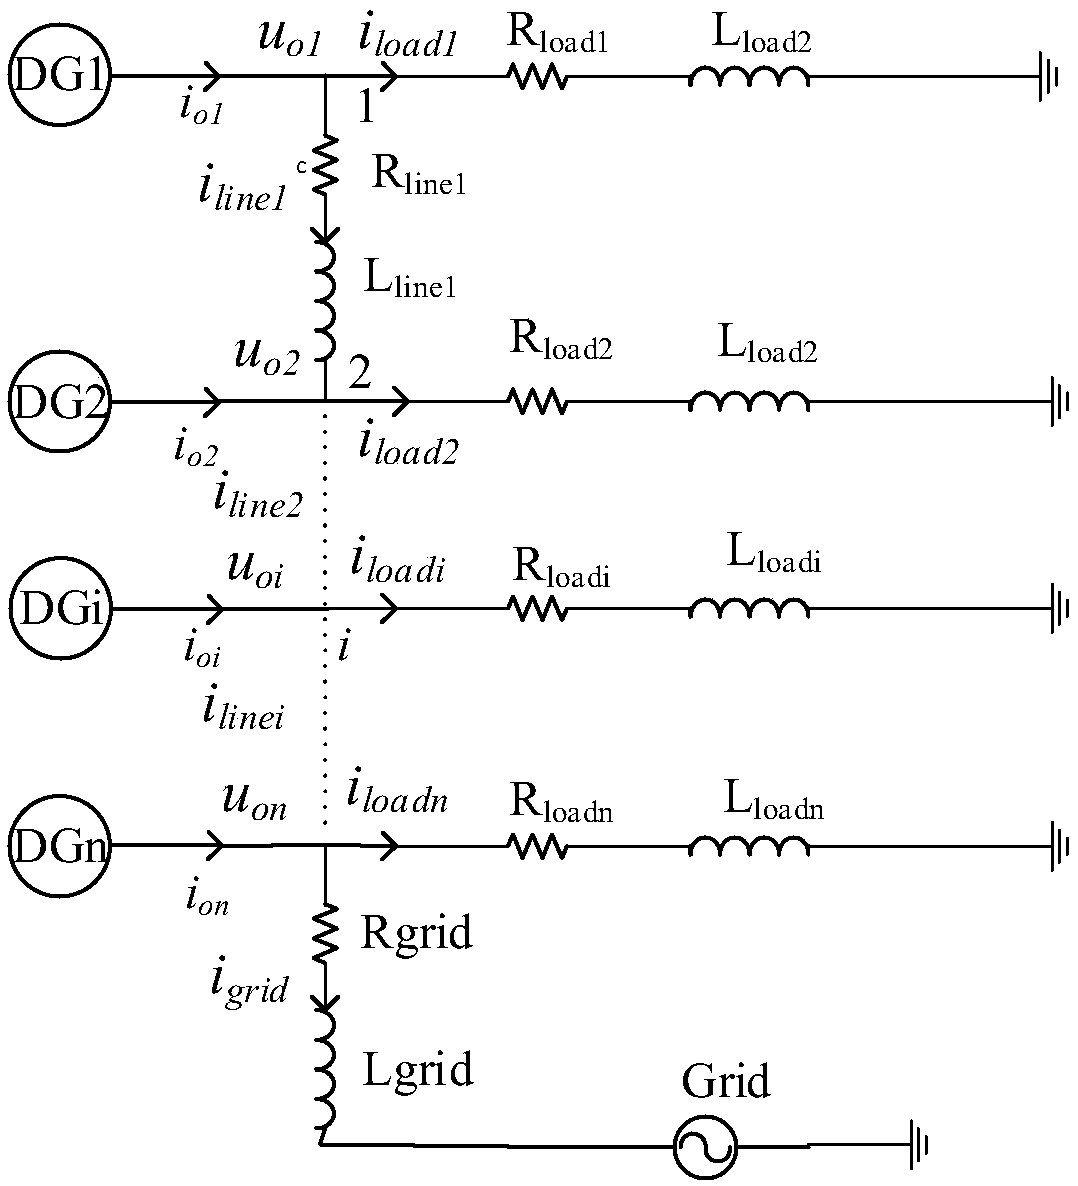 A microgrid stability control method based on bifurcation theory